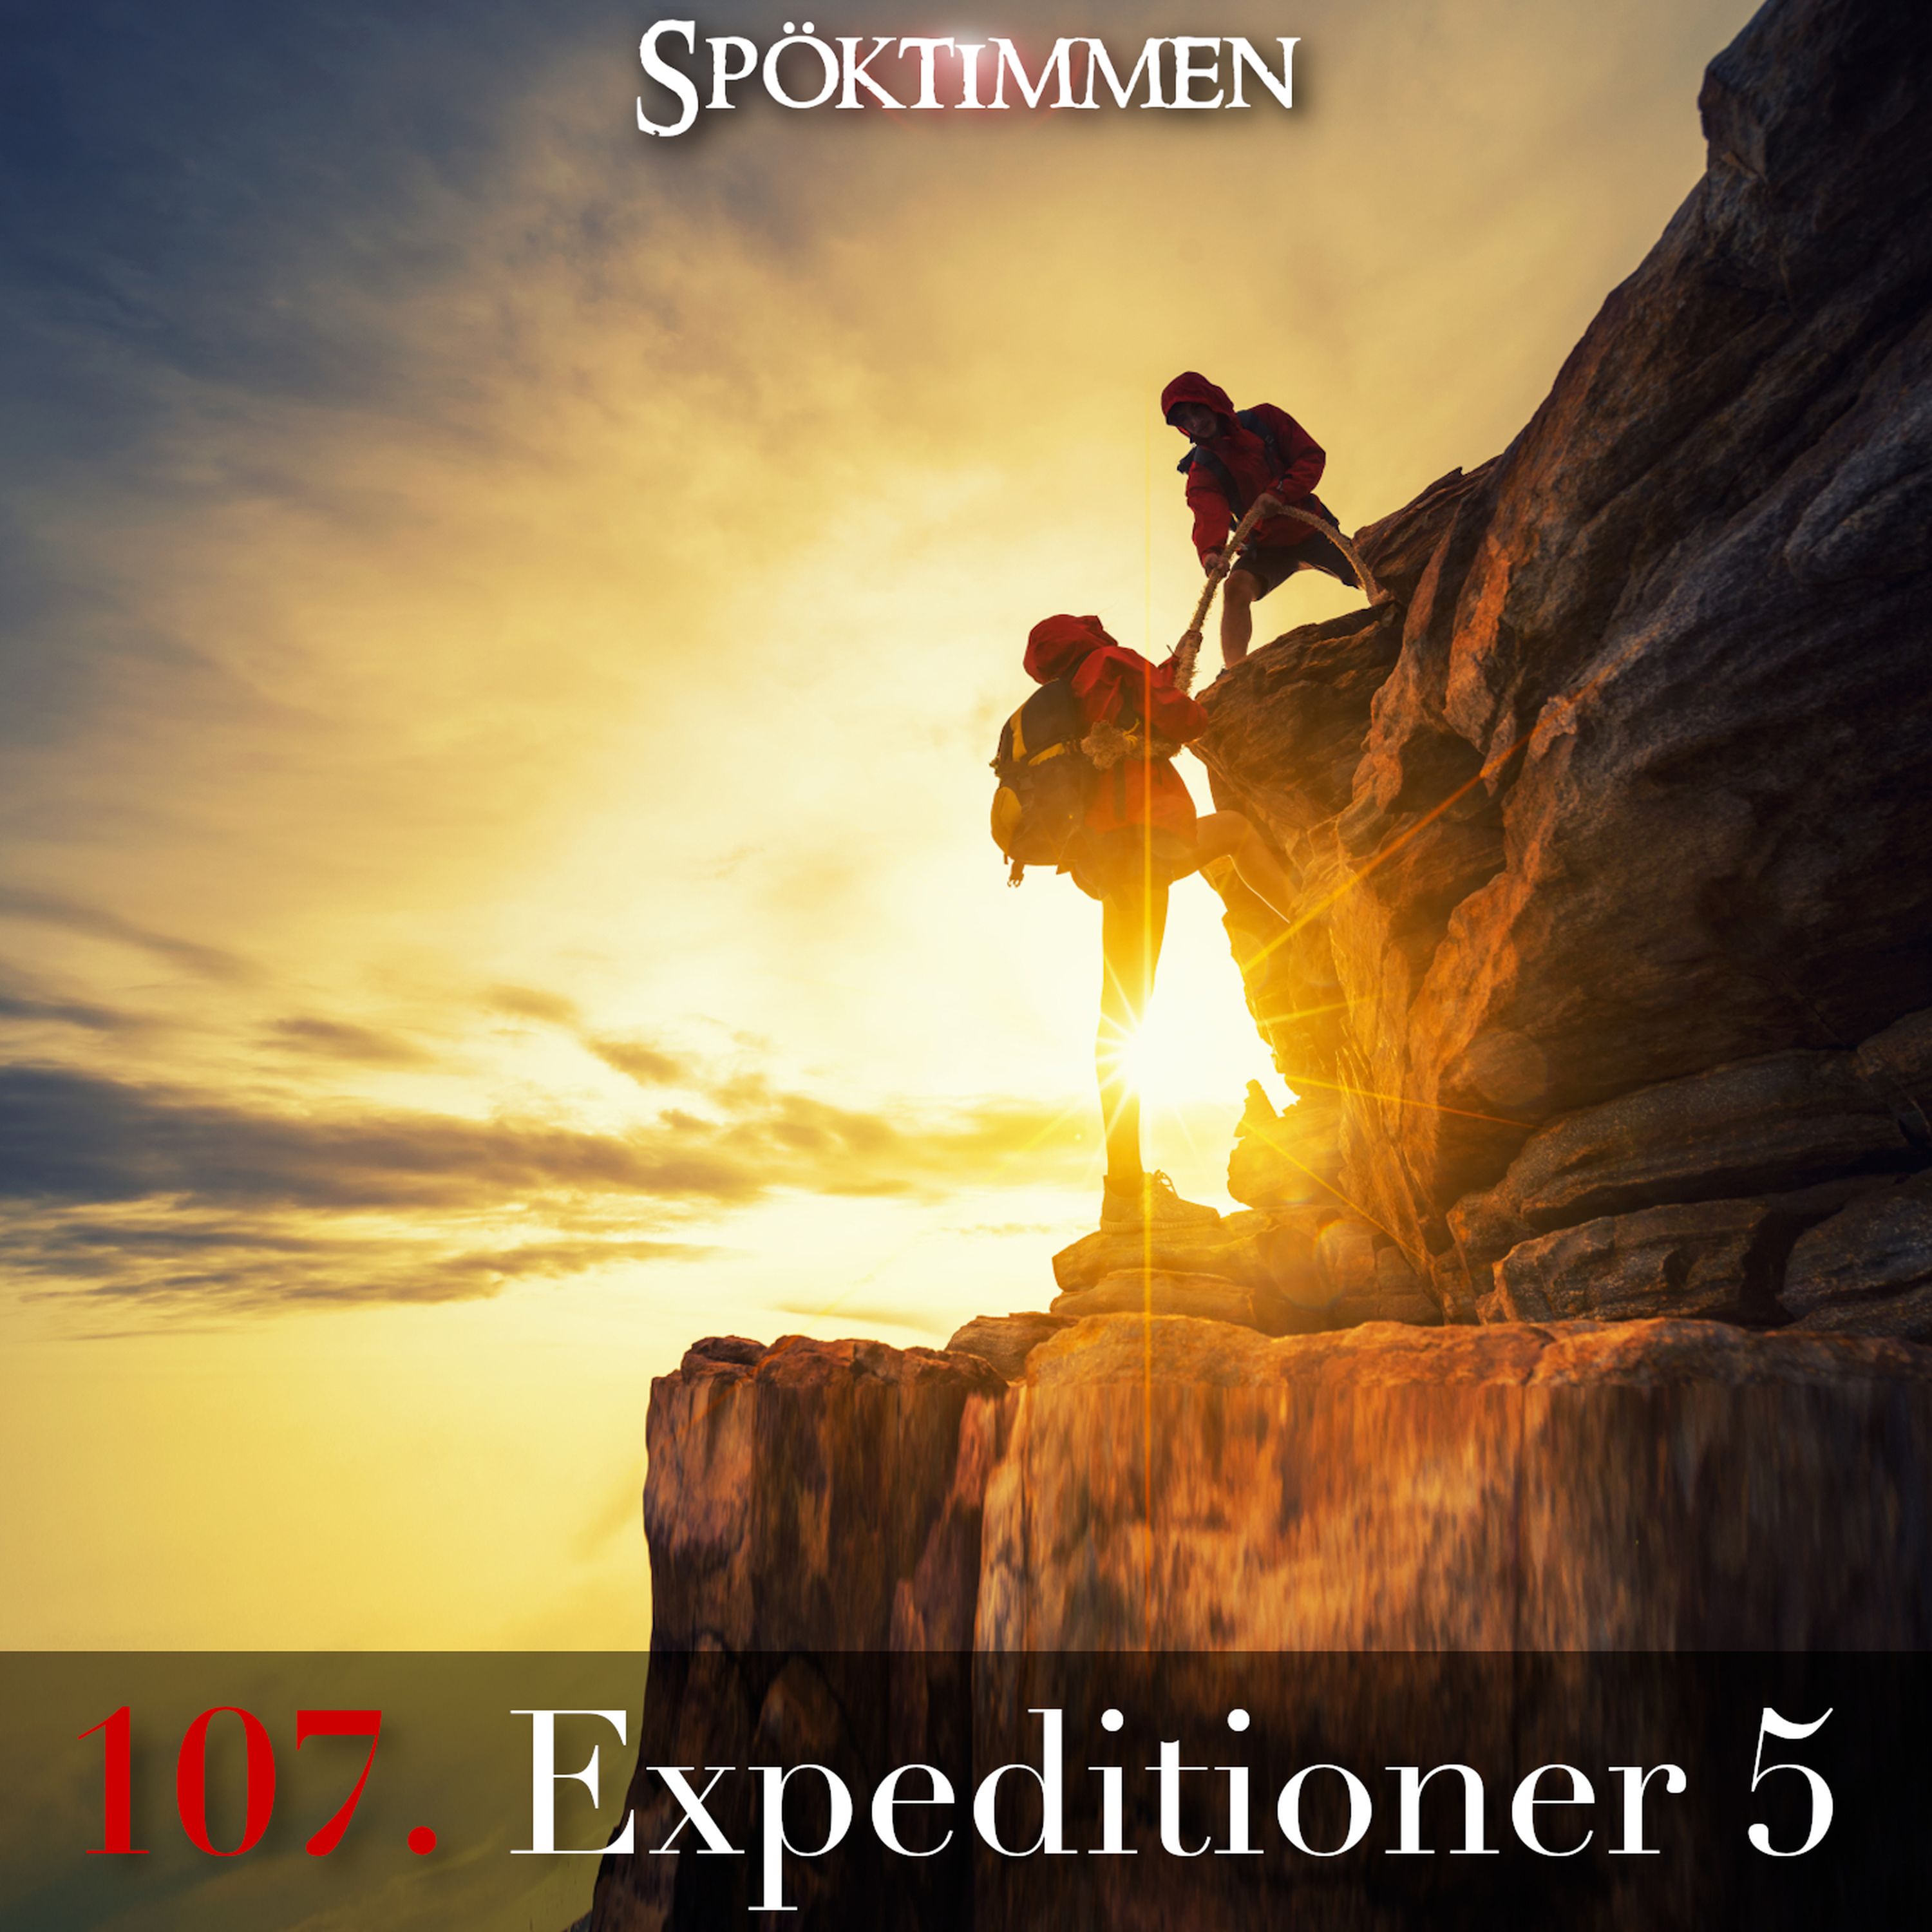 107. Expeditioner 5